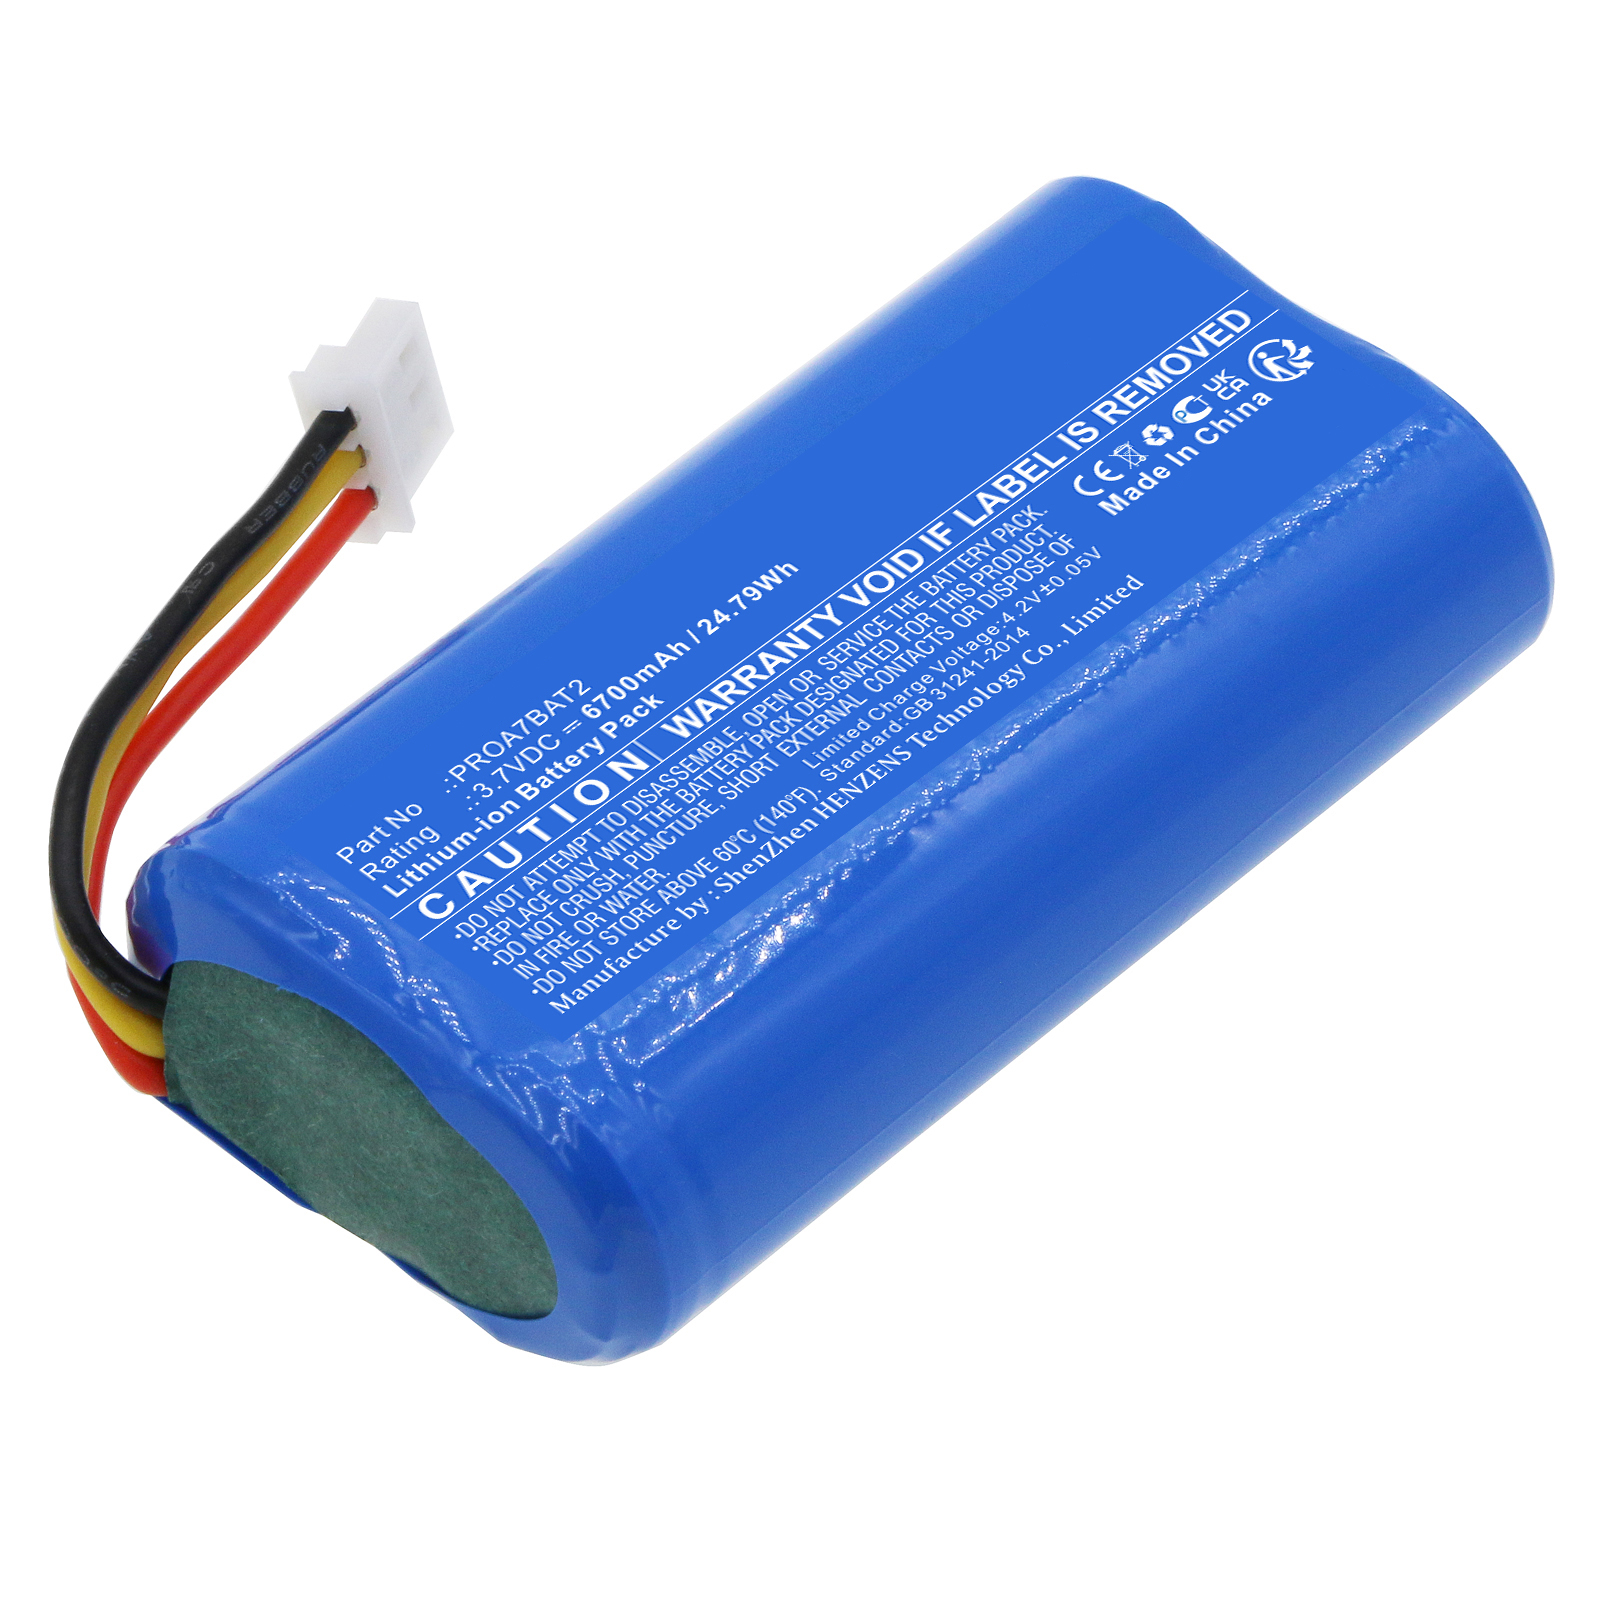 Synergy Digital Alarm System Battery, Compatible with Honeywell PROA7BAT2 Alarm System Battery (Li-ion, 3.7V, 6700mAh)